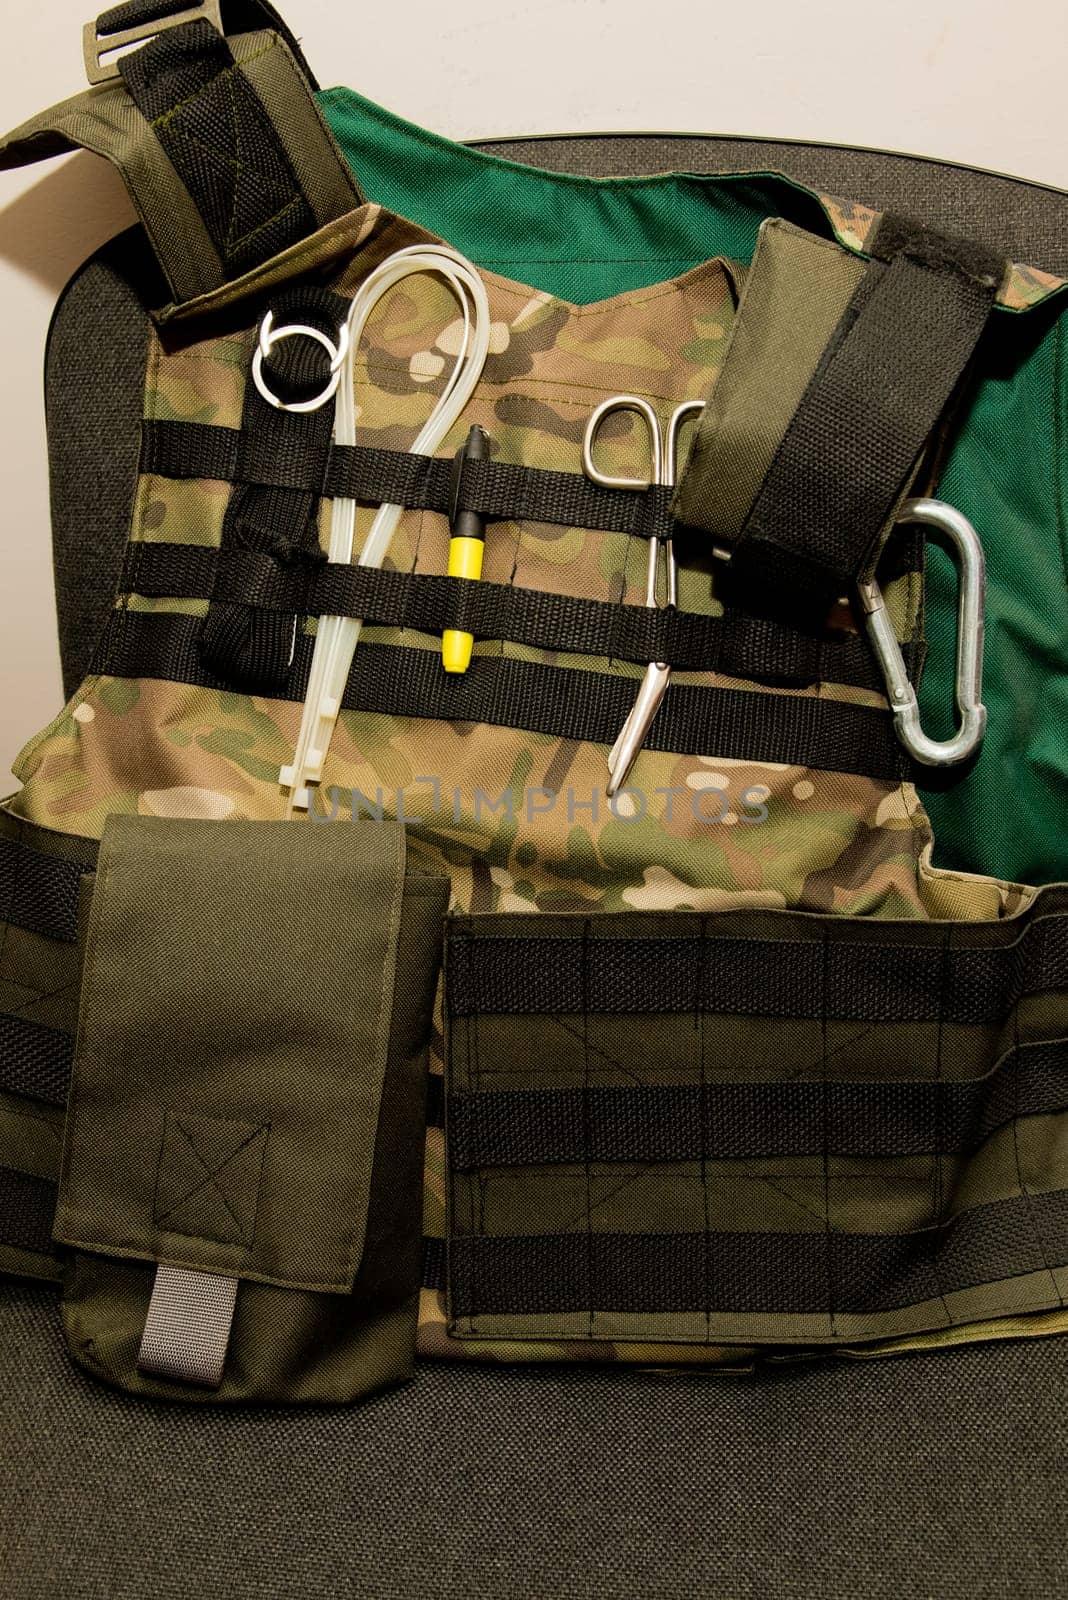 Military body armor with a pouch. Army body armor. by leonik